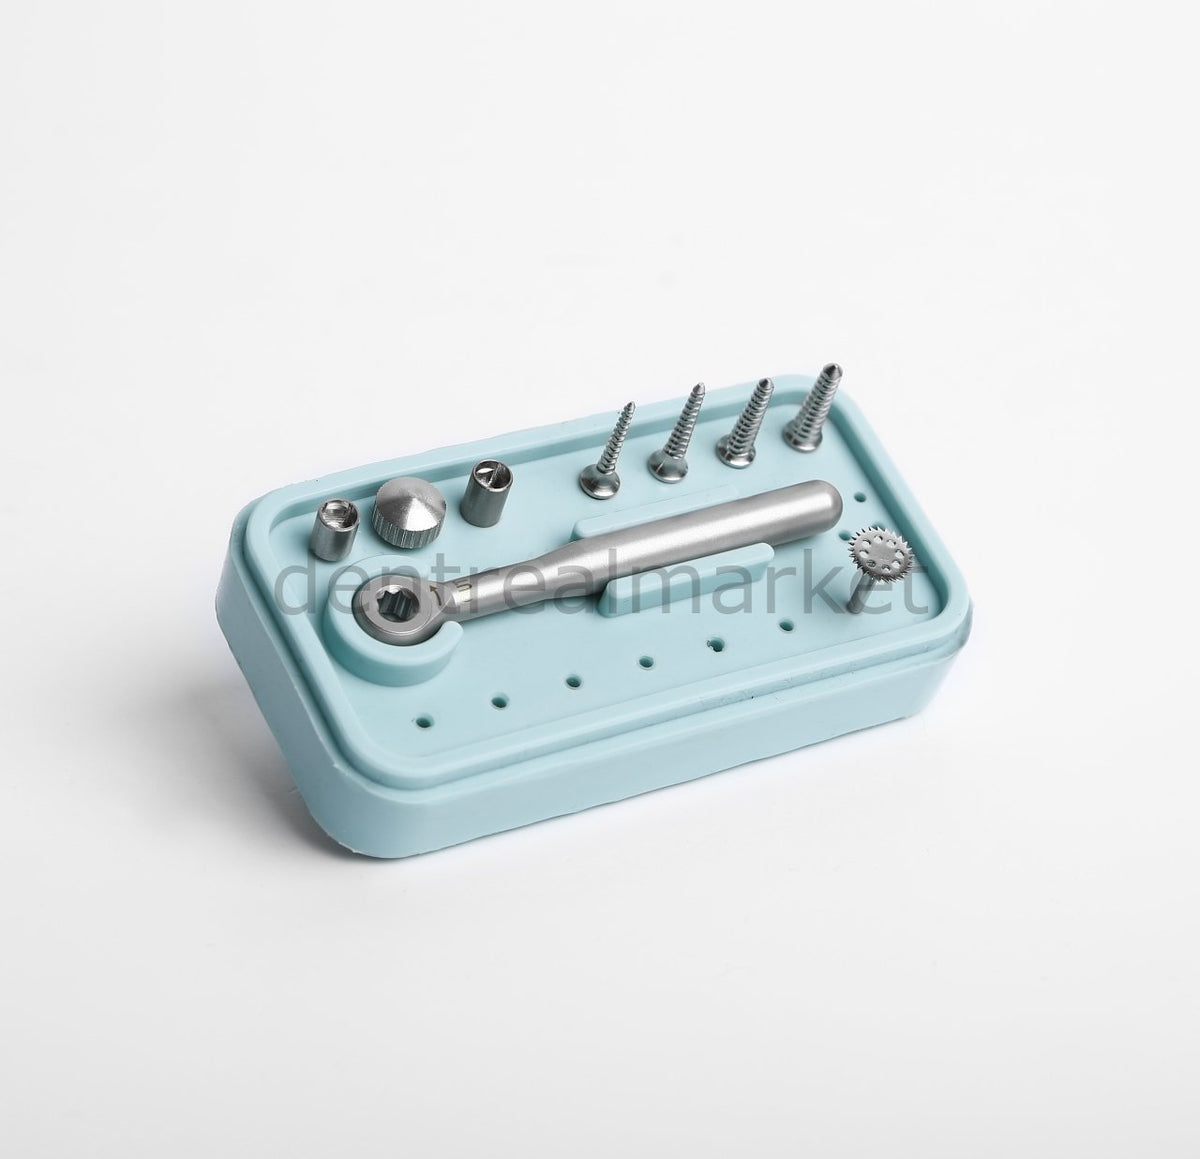 DentrealStore - Dentreal Bone Expander Drill Kit - Dental Bone Expansion